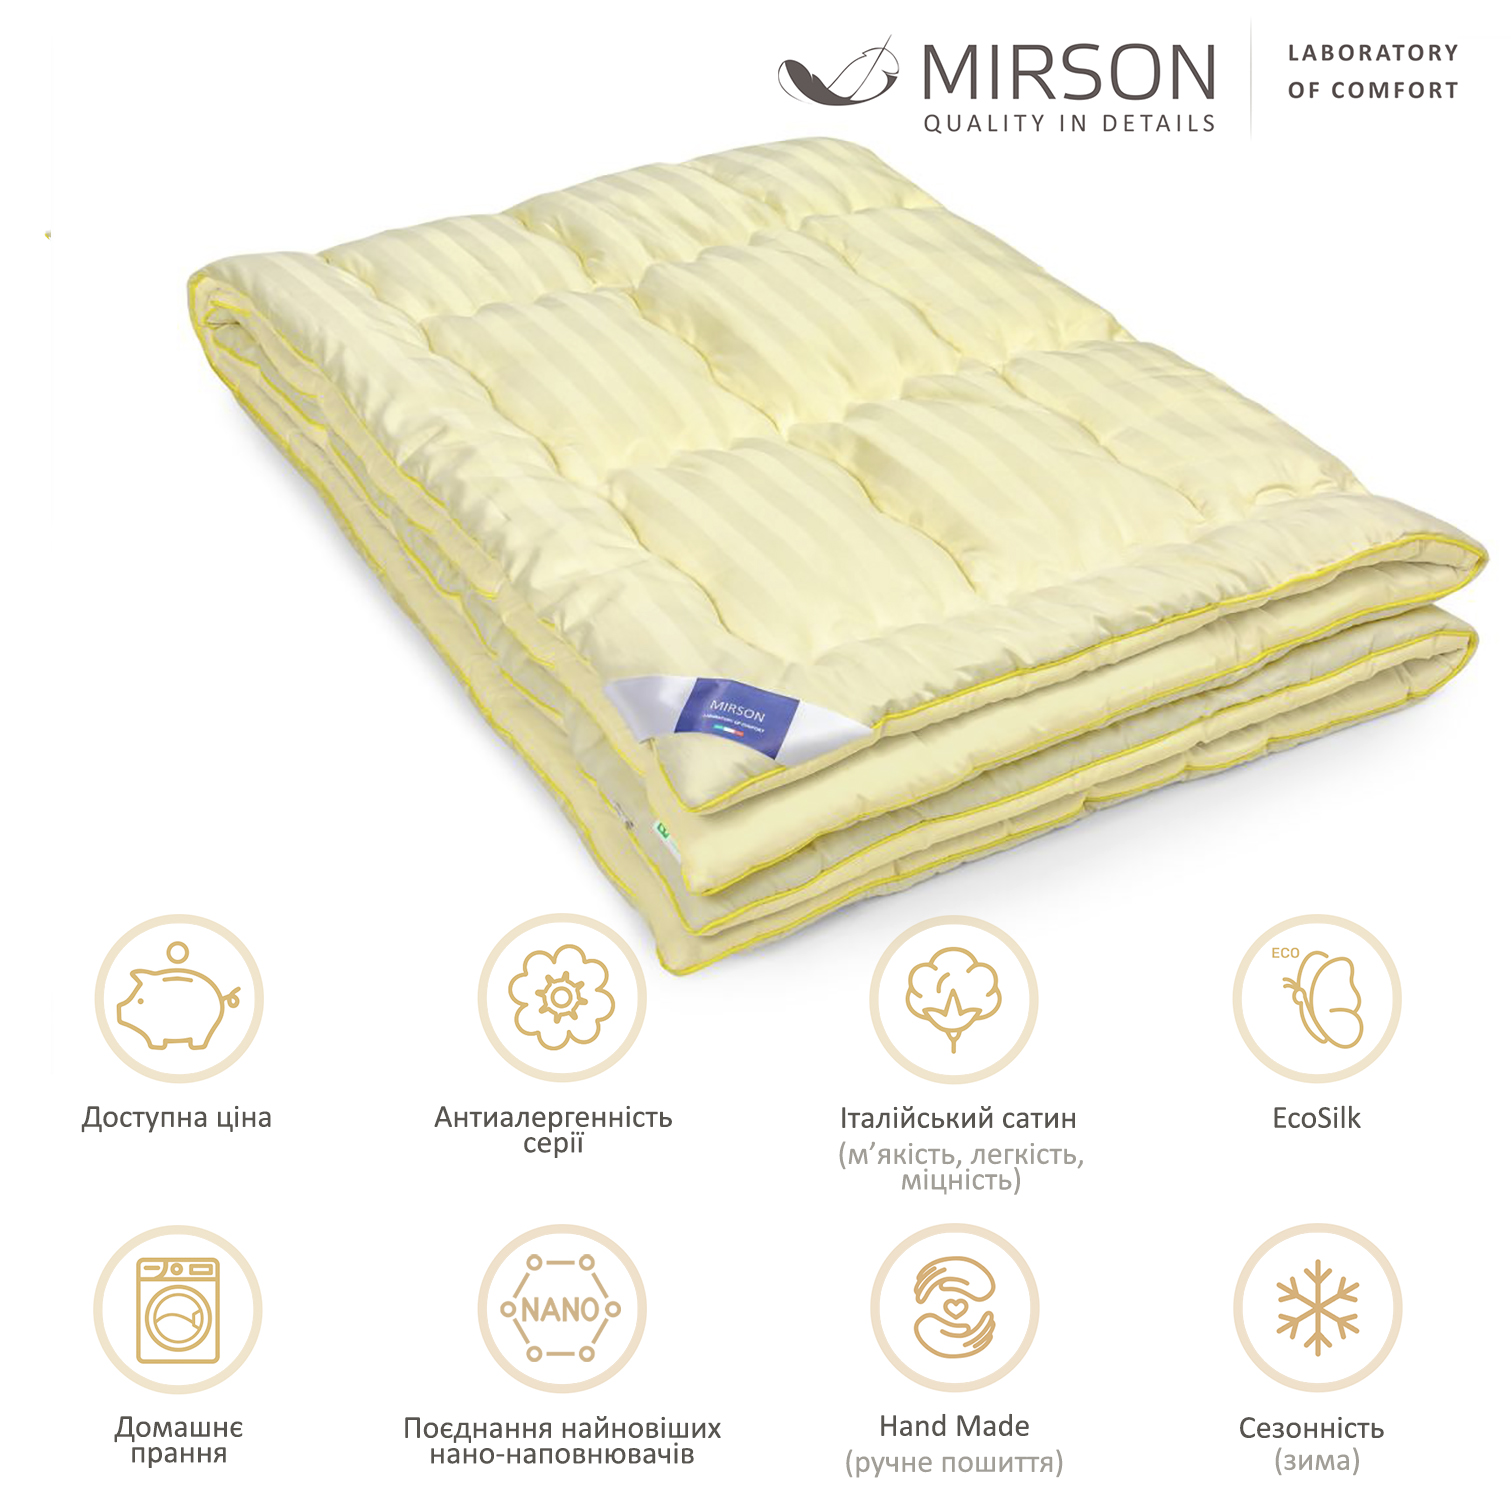 Одеяло антиаллергенное MirSon Carmela Hand Made EcoSilk №068, зимнее, 155x215 см, светло-желтое - фото 4